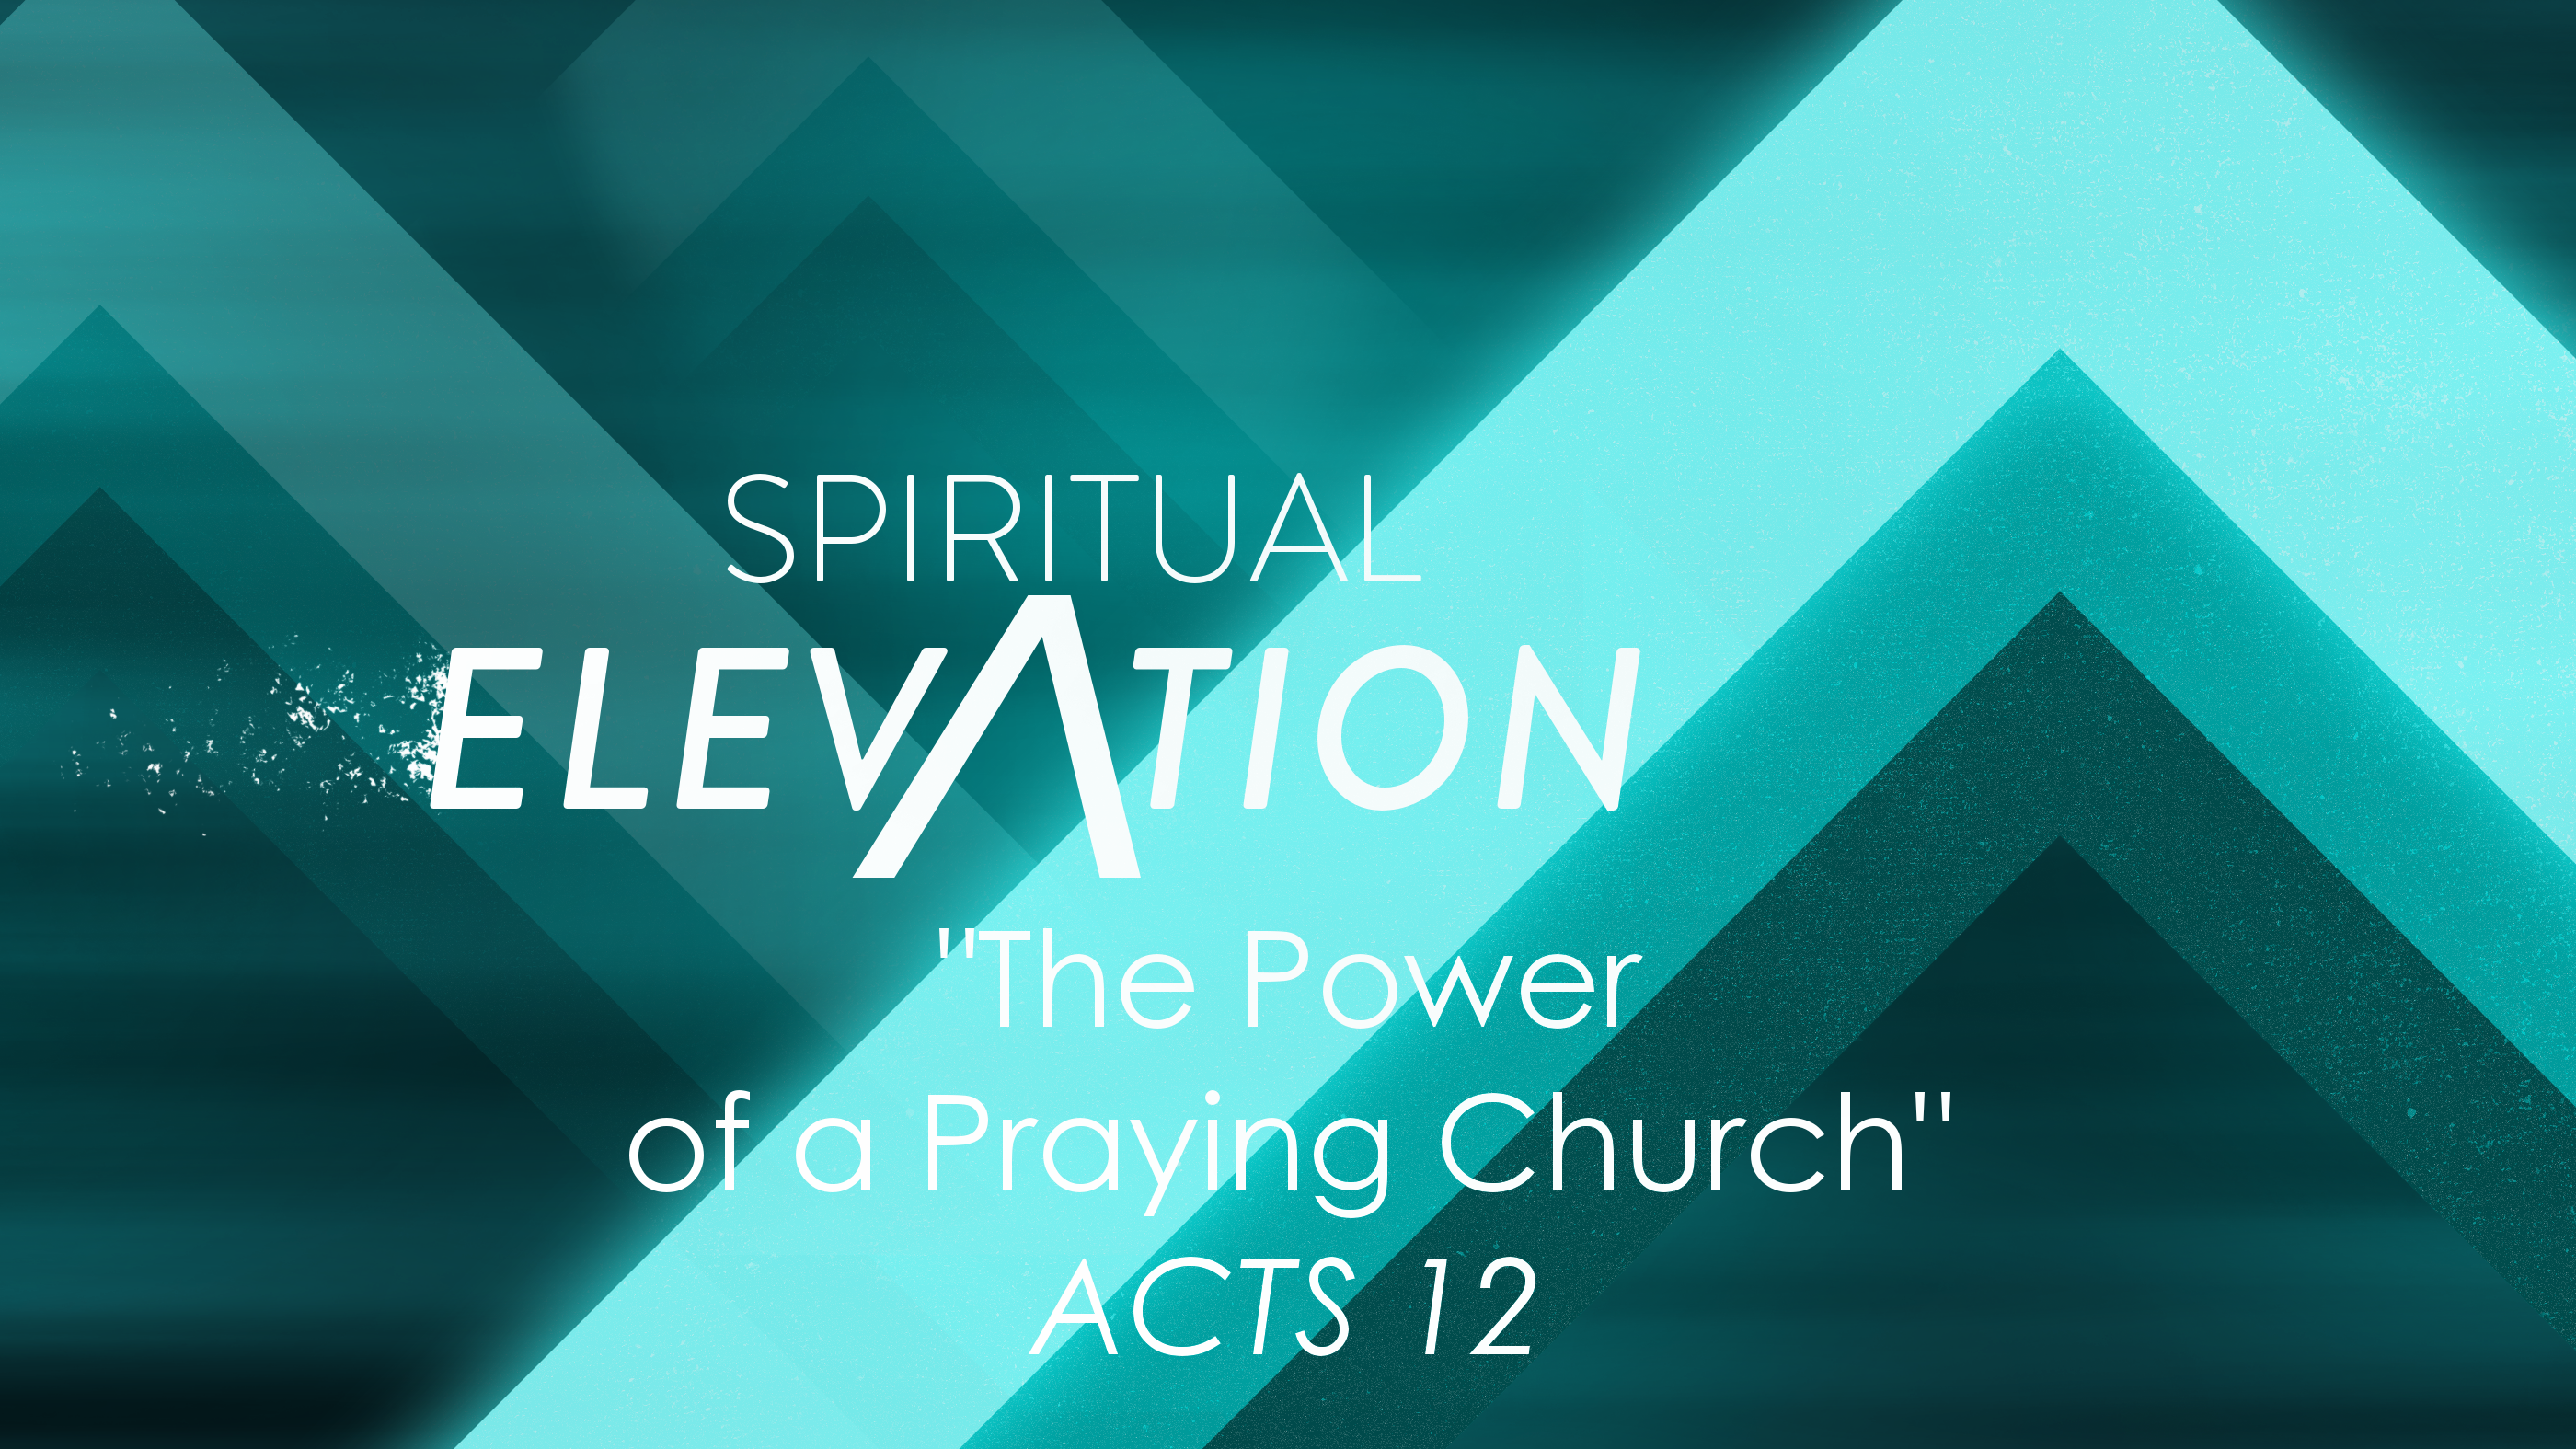 Spiritual Elevation - “The Power of a Praying Church”